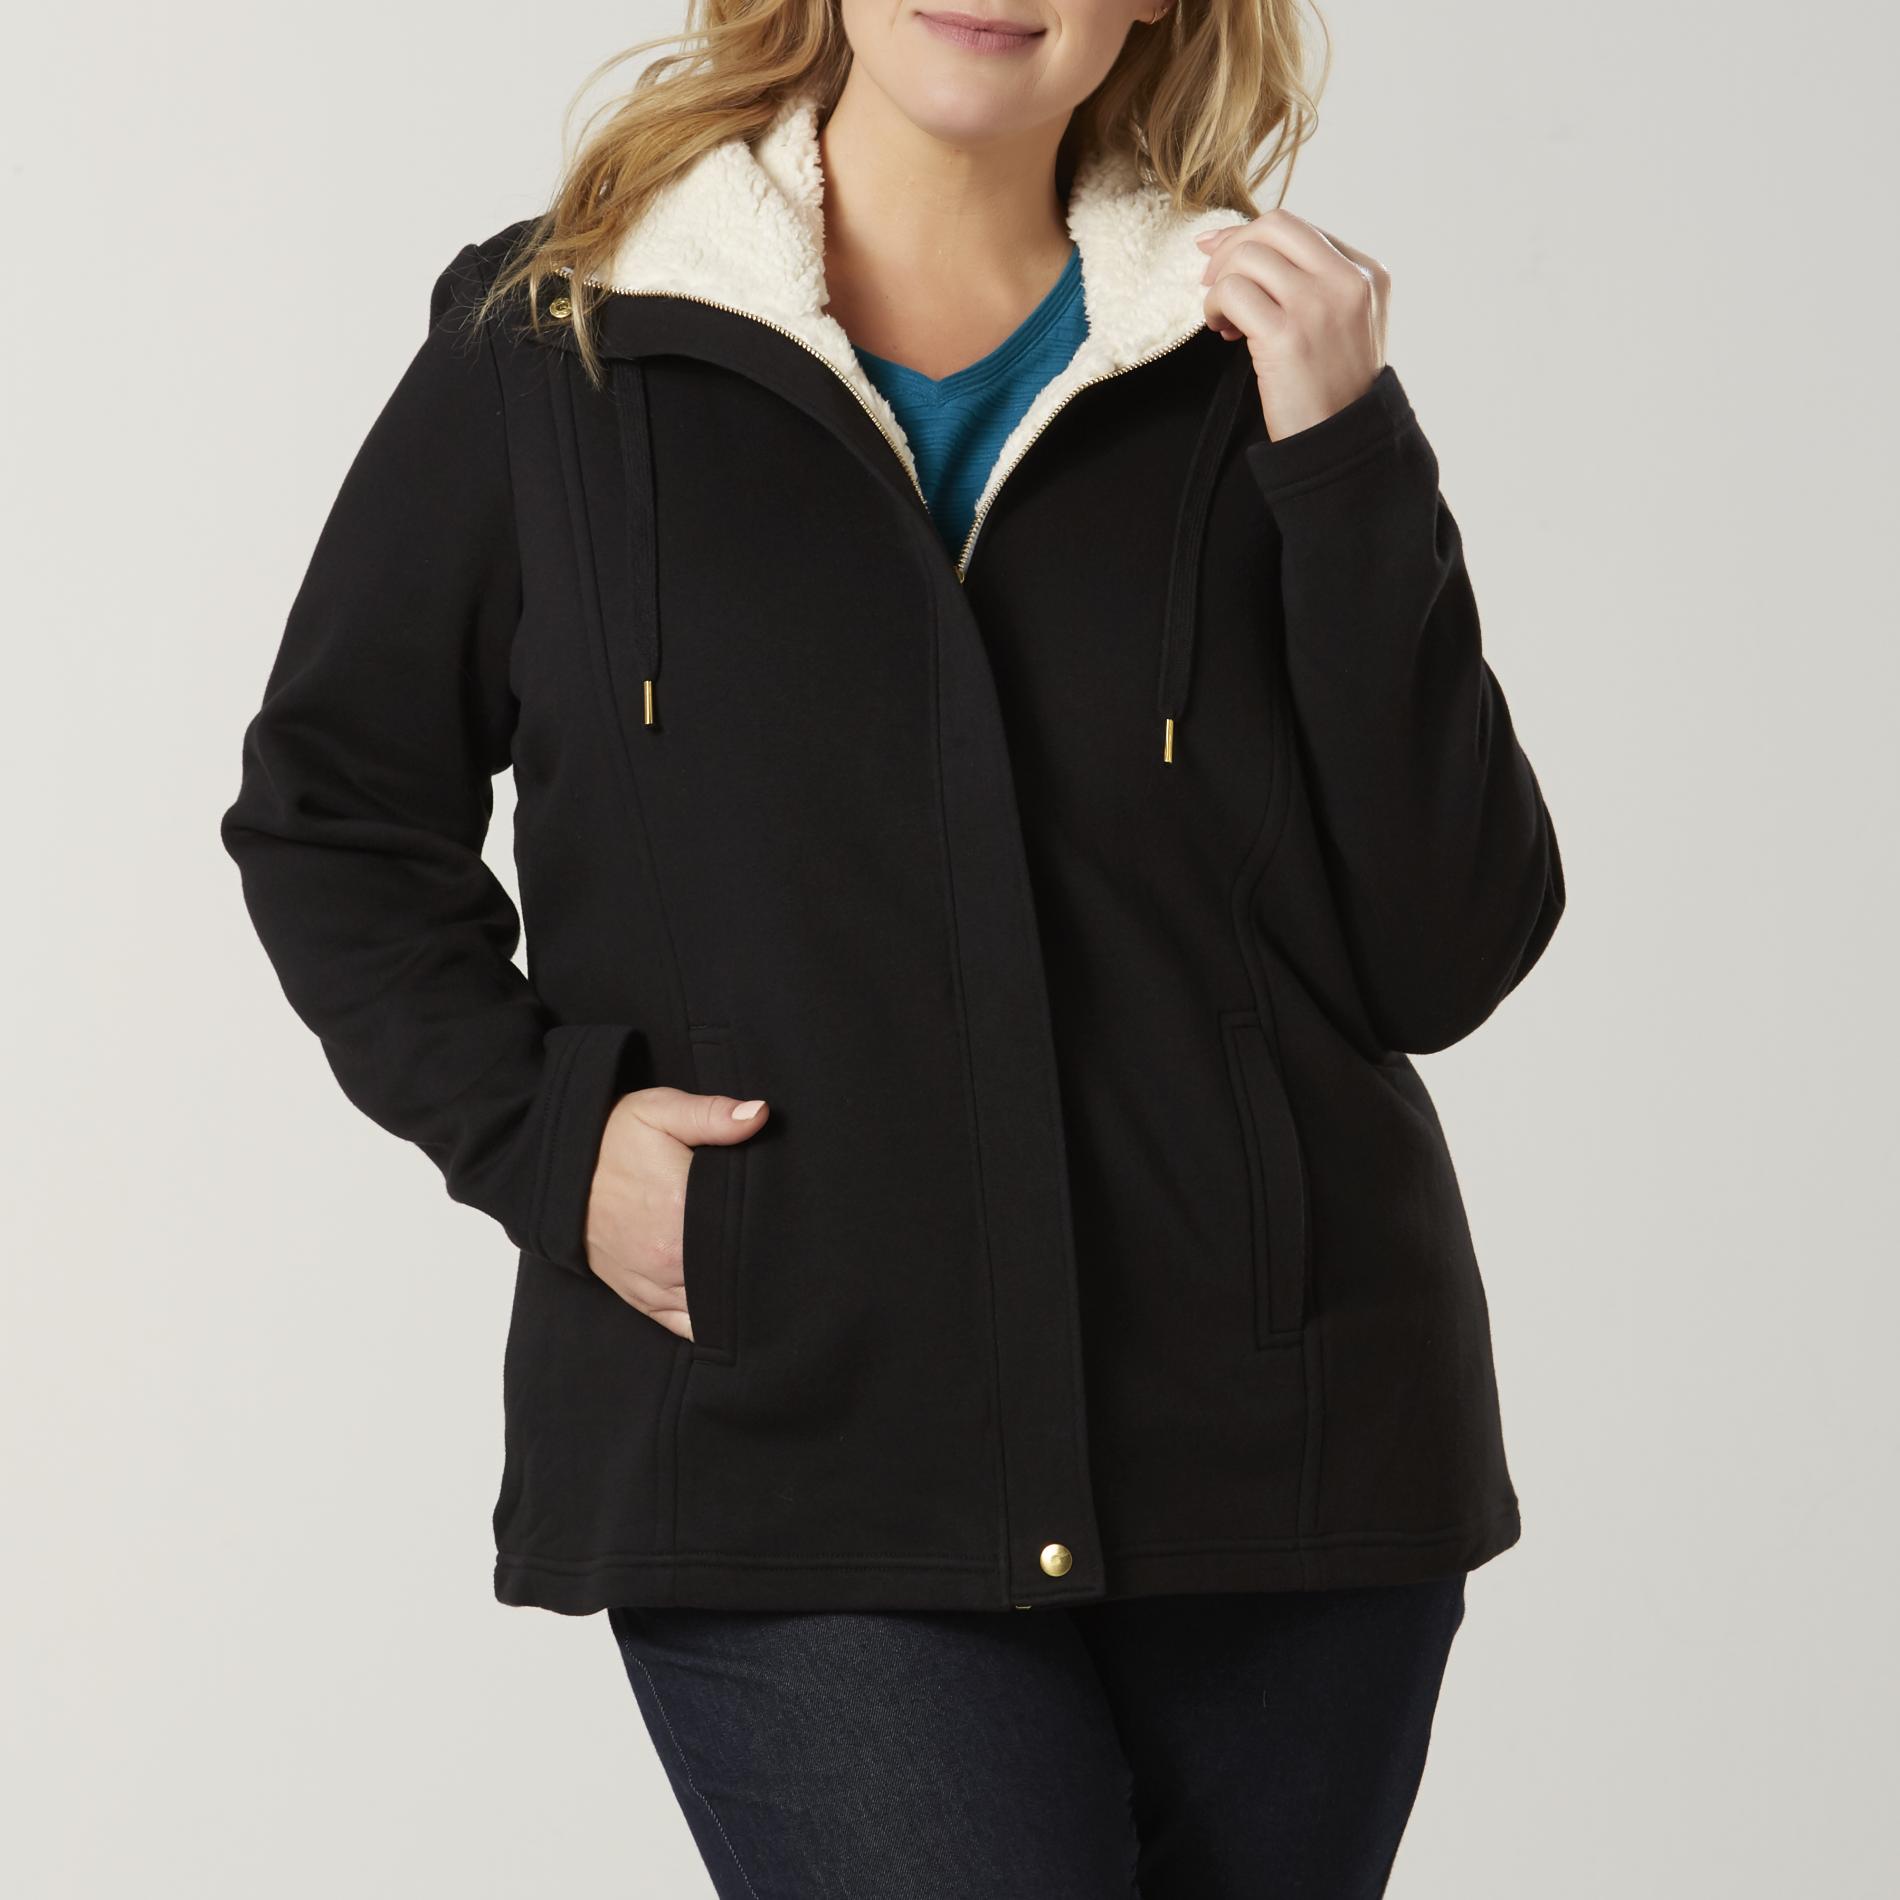 Plus Size Coats \u0026 Jackets On Sale - Kmart